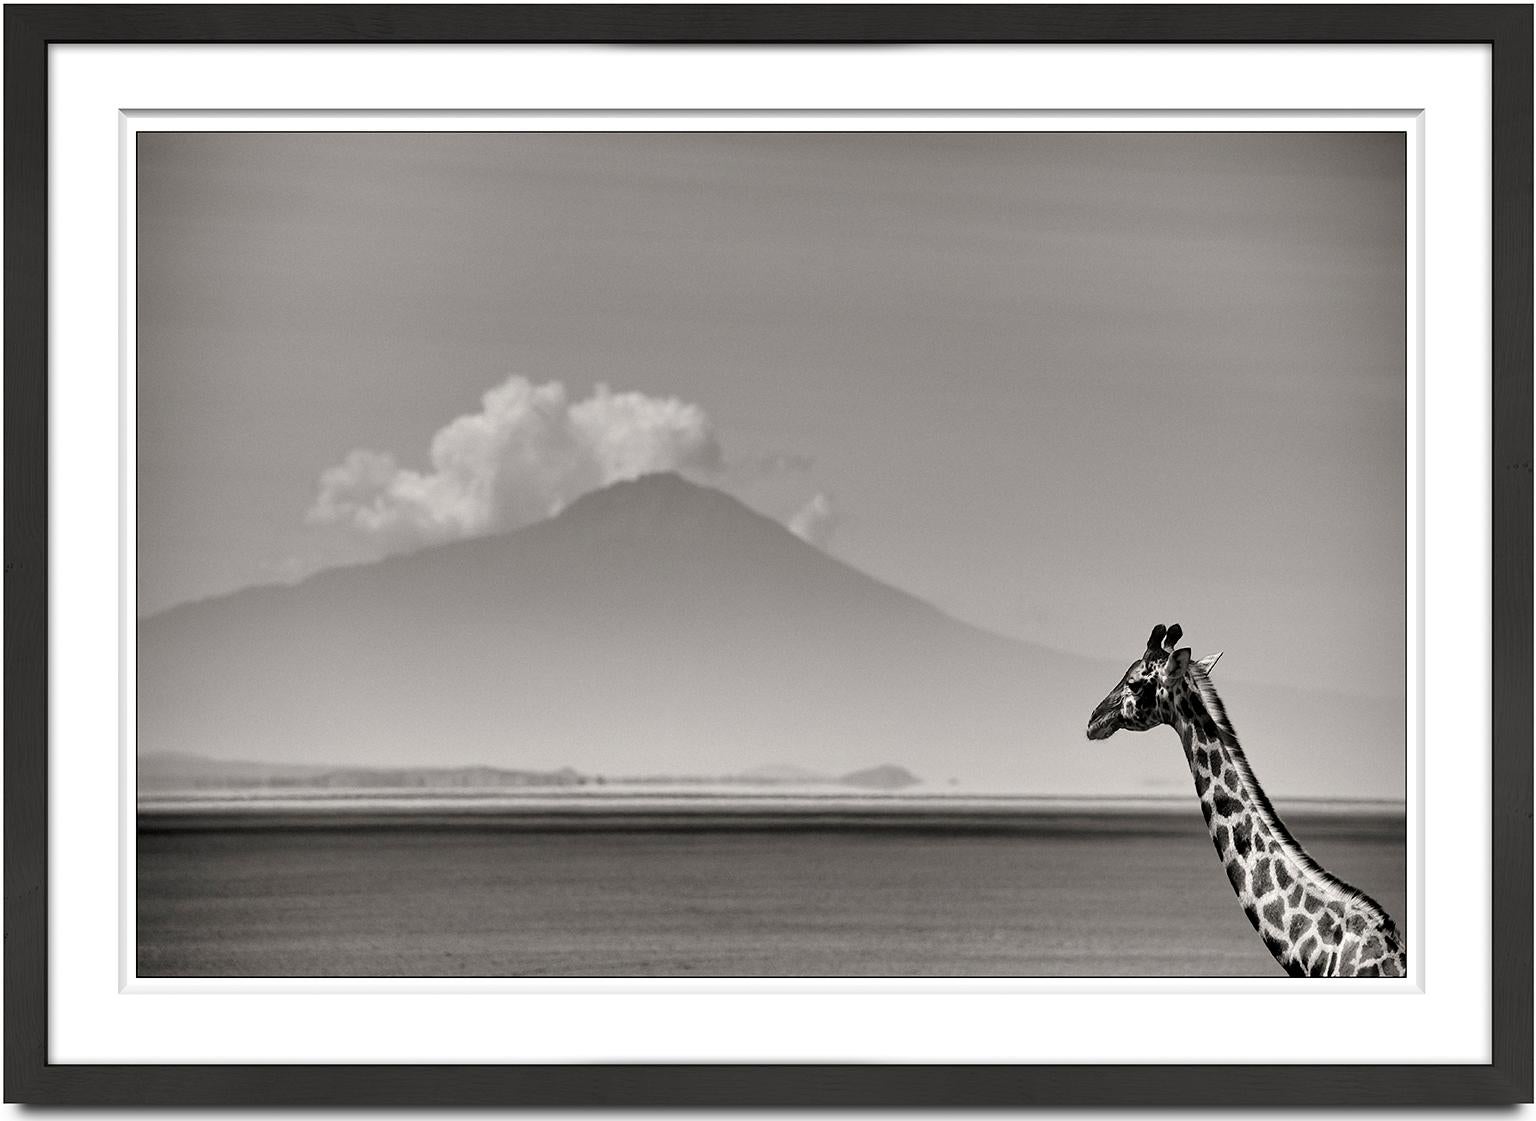 Giraffe in front of MtKenya, animal, wildlife, black and white photography - Photograph by Joachim Schmeisser